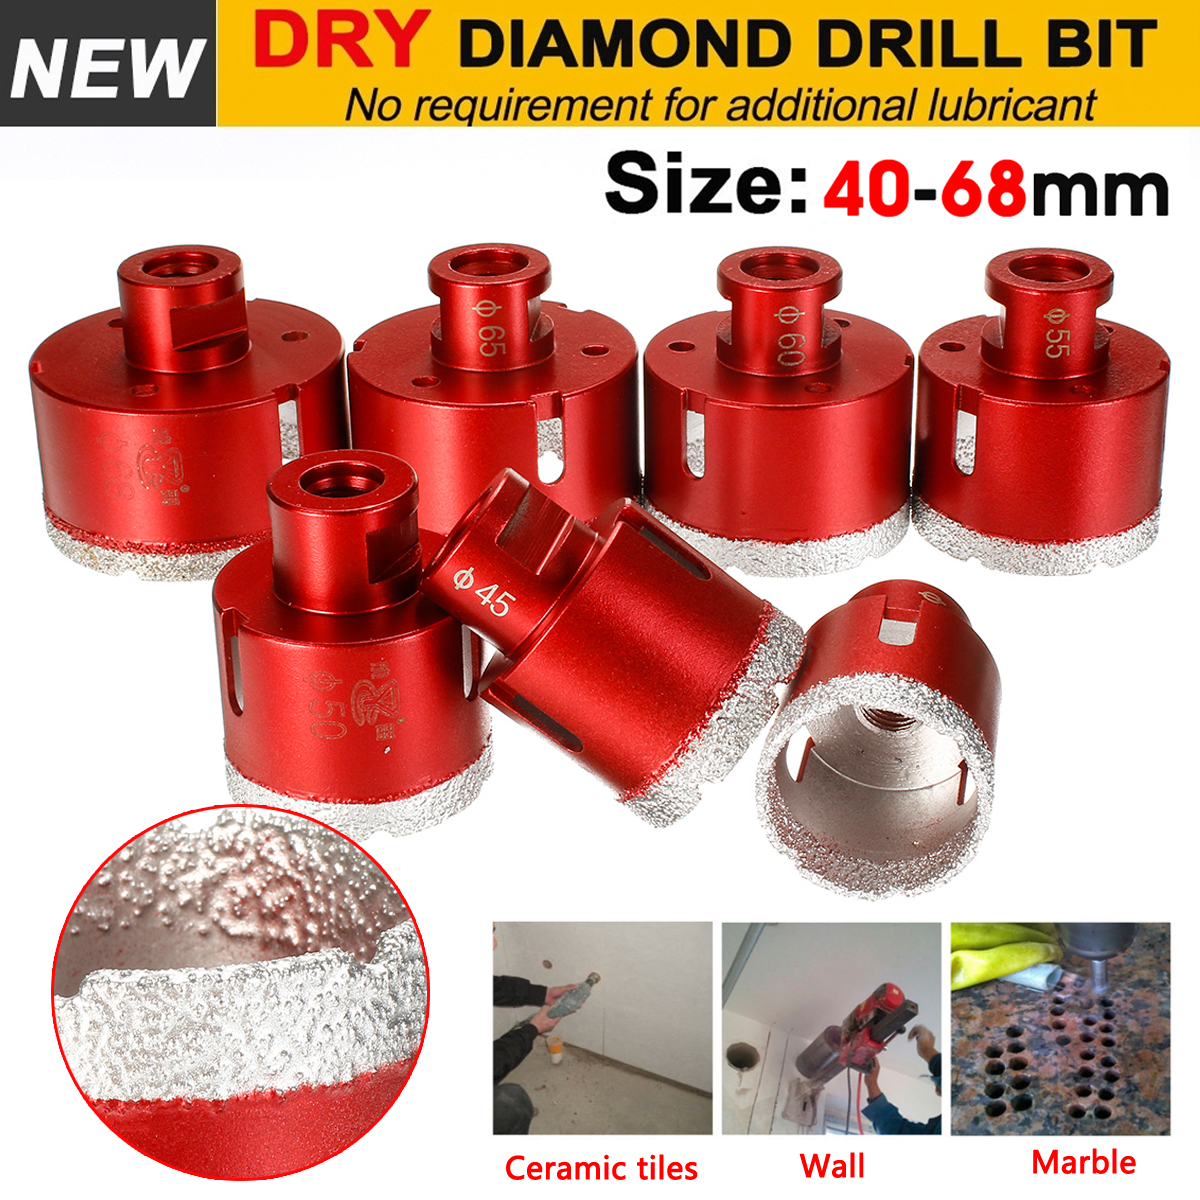 Doersupp 40-68mm M14 Diamond Drill Core Bits Drilling Hole Saw Tools For Tile Marble Granite Stone Brick Tile Ceramic Concrete